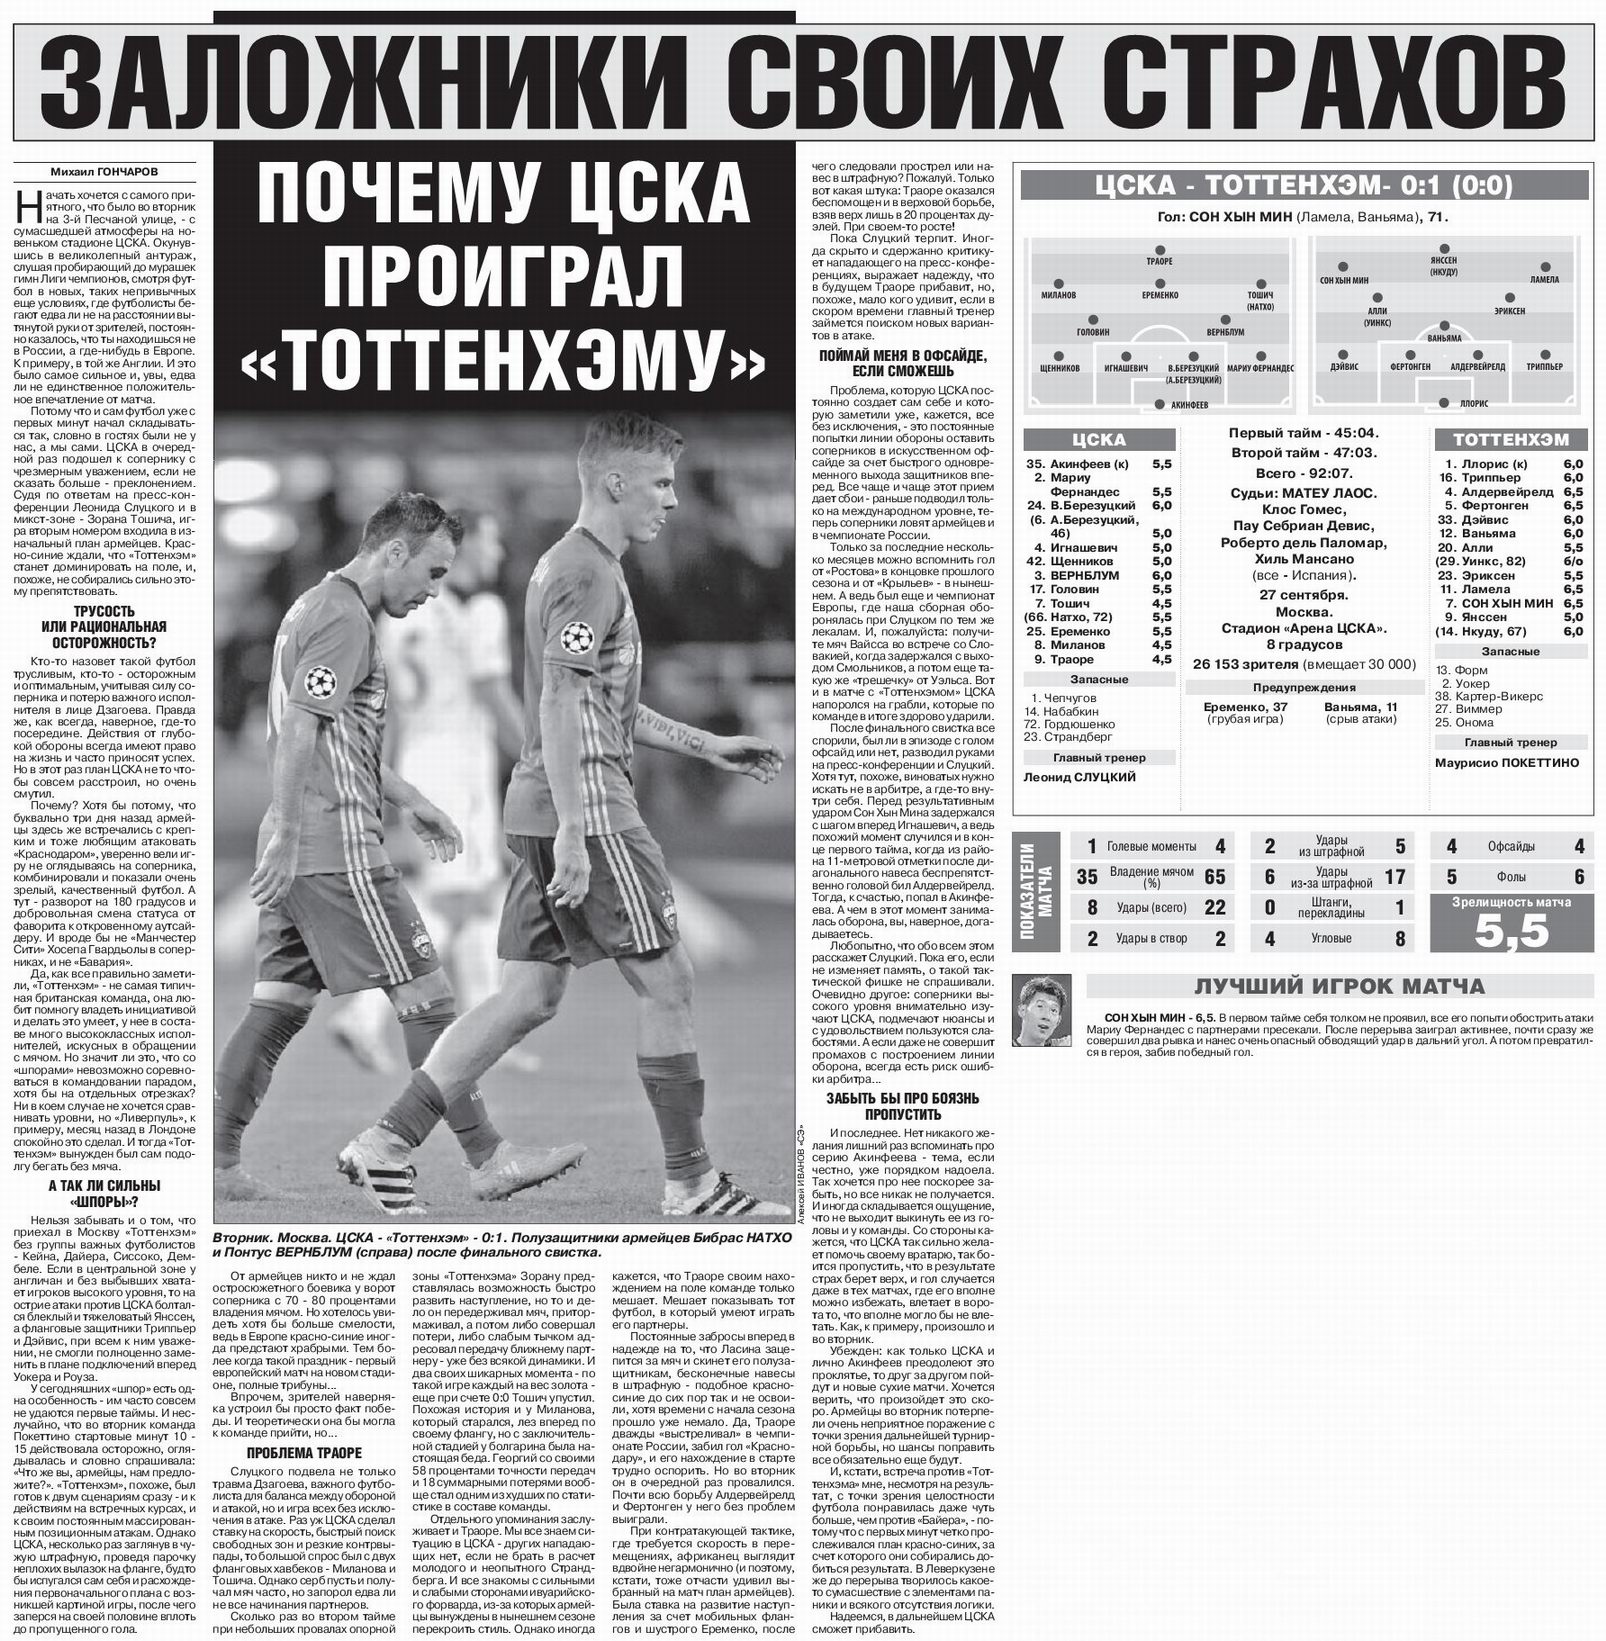 2016-09-27.CSKA-TottenhamHotspur.1